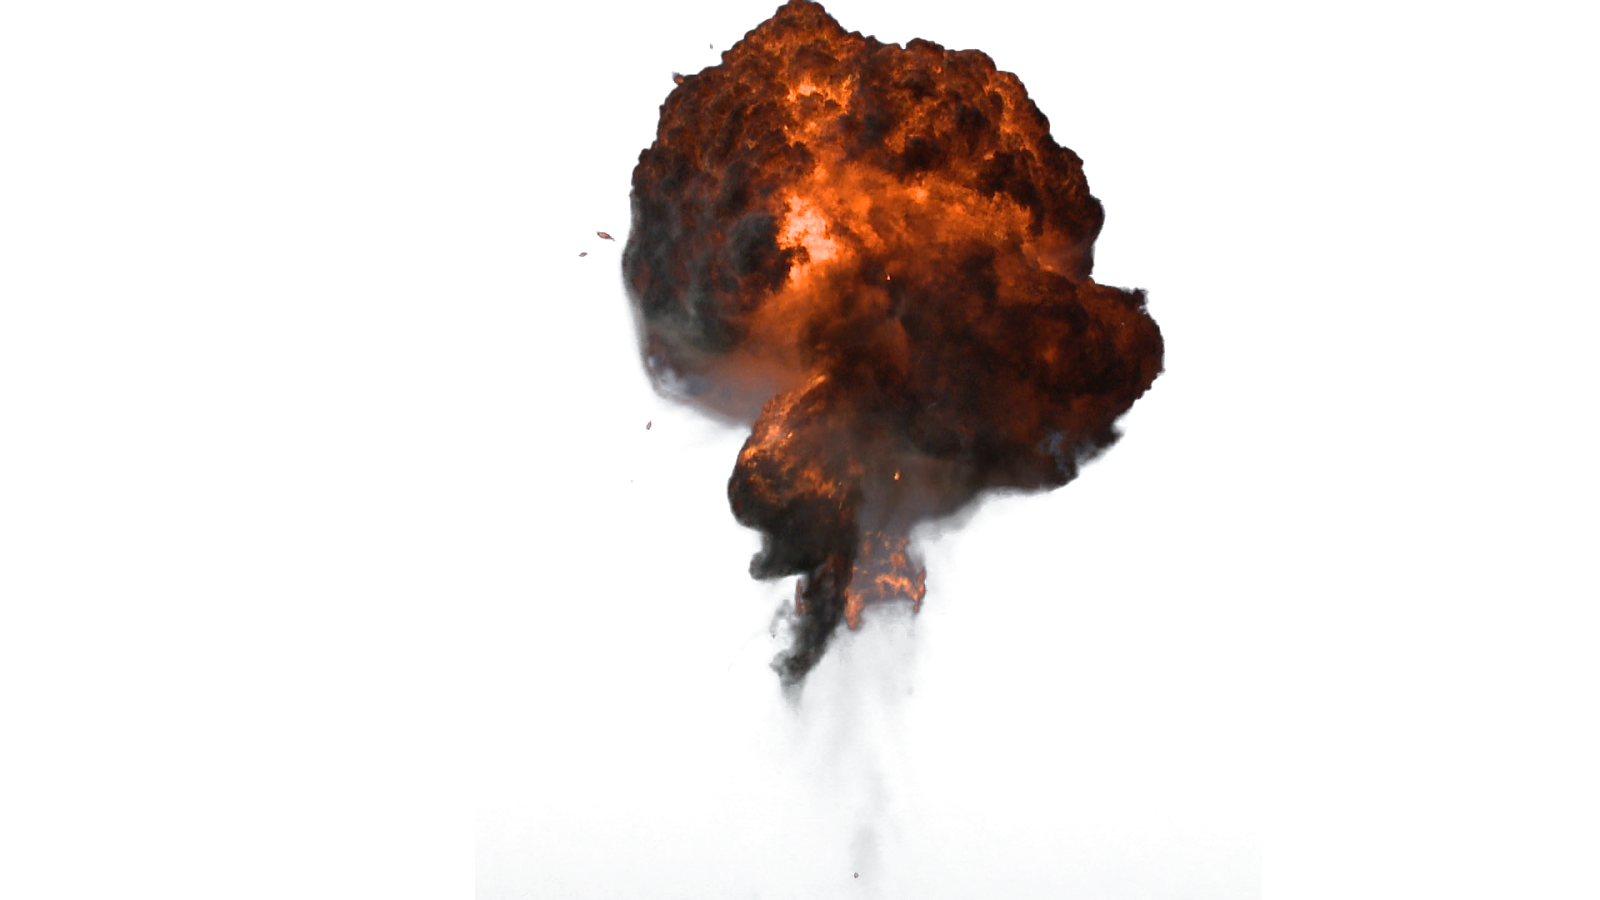 Minecraft pocket edition volcano. Smoke explosion png